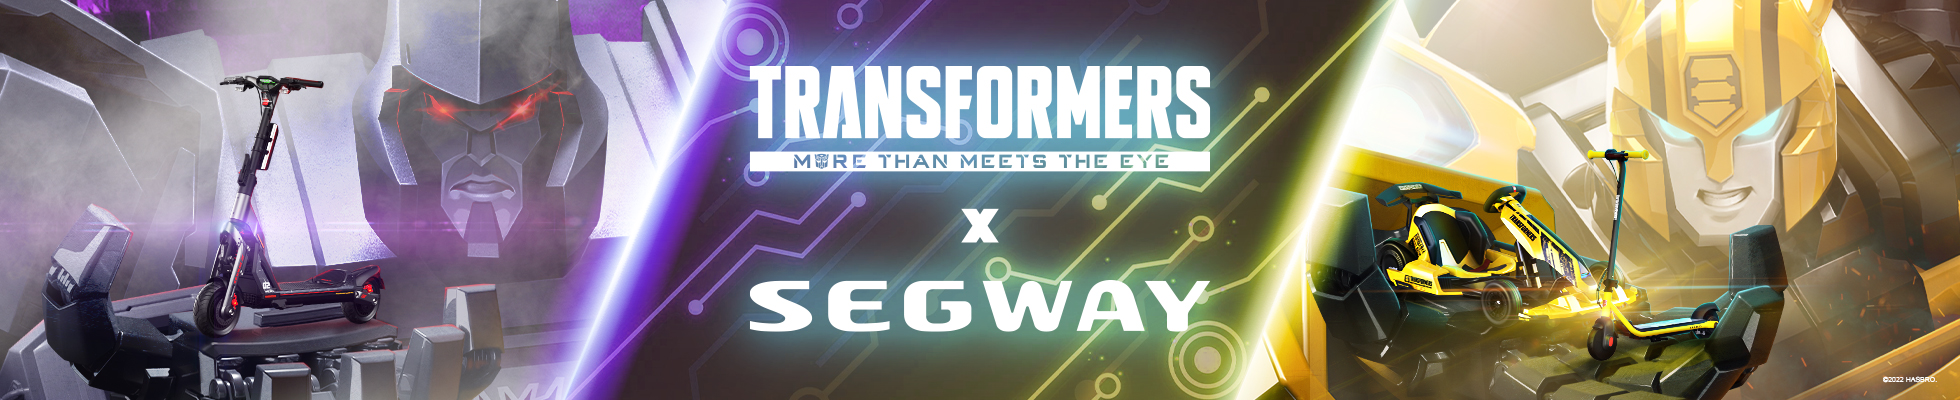 Transformers x Segway banner